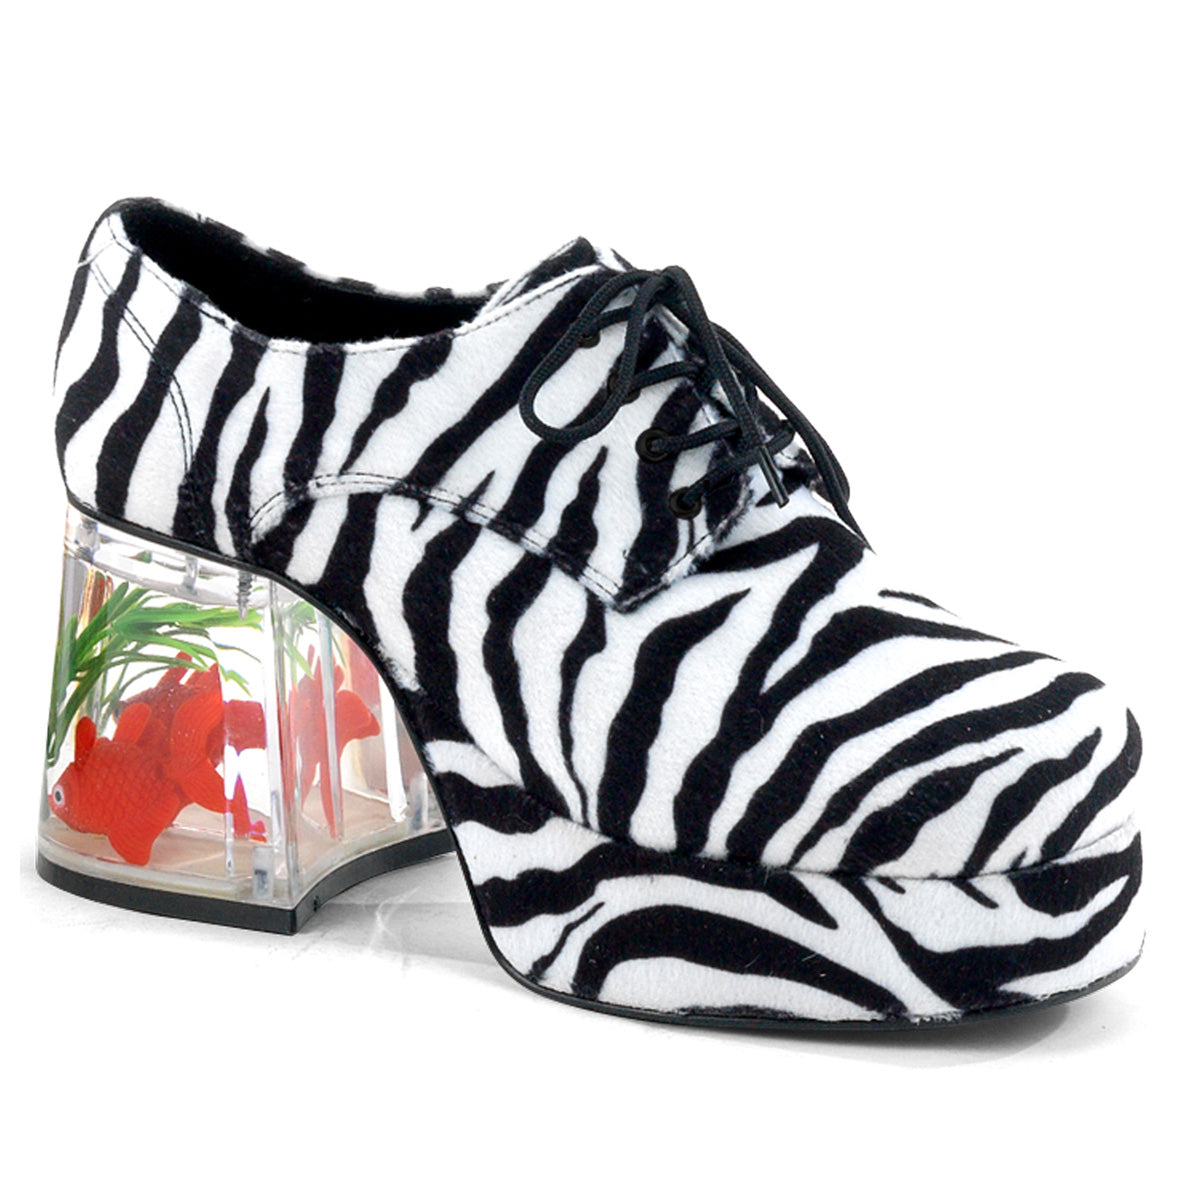 Funtasma Mens Low Shoe PIMP-02 Zebra Fur